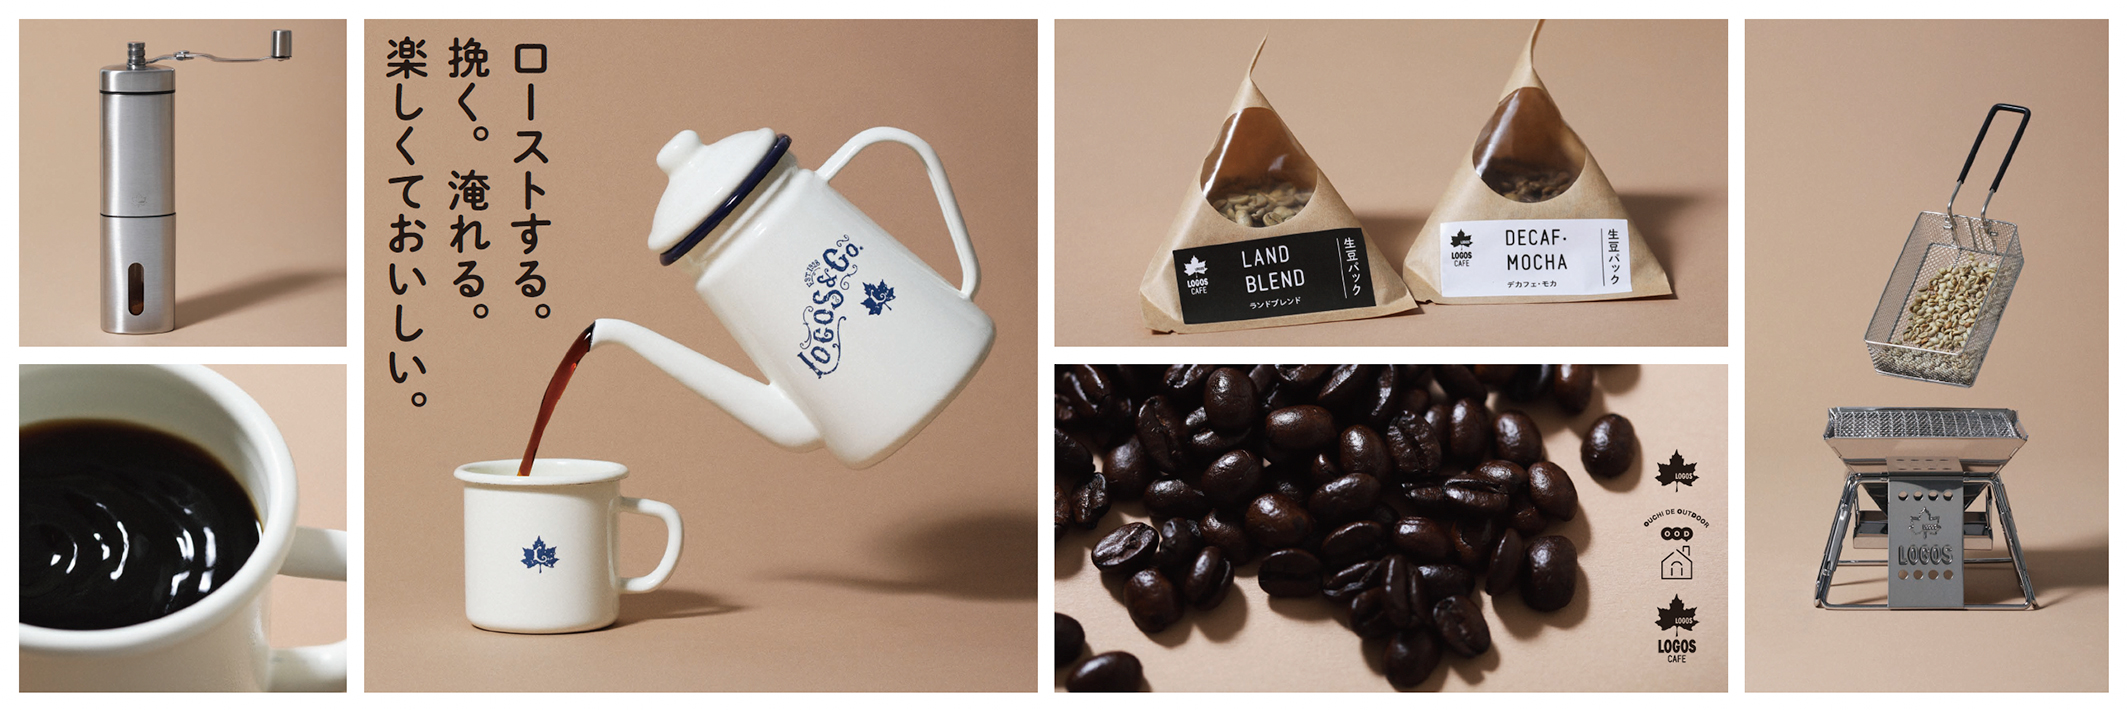 Logos Cafe ドリップパック ランドブレンド コレクション 食品 コーヒー 製品情報 ロゴスショップ公式オンライン